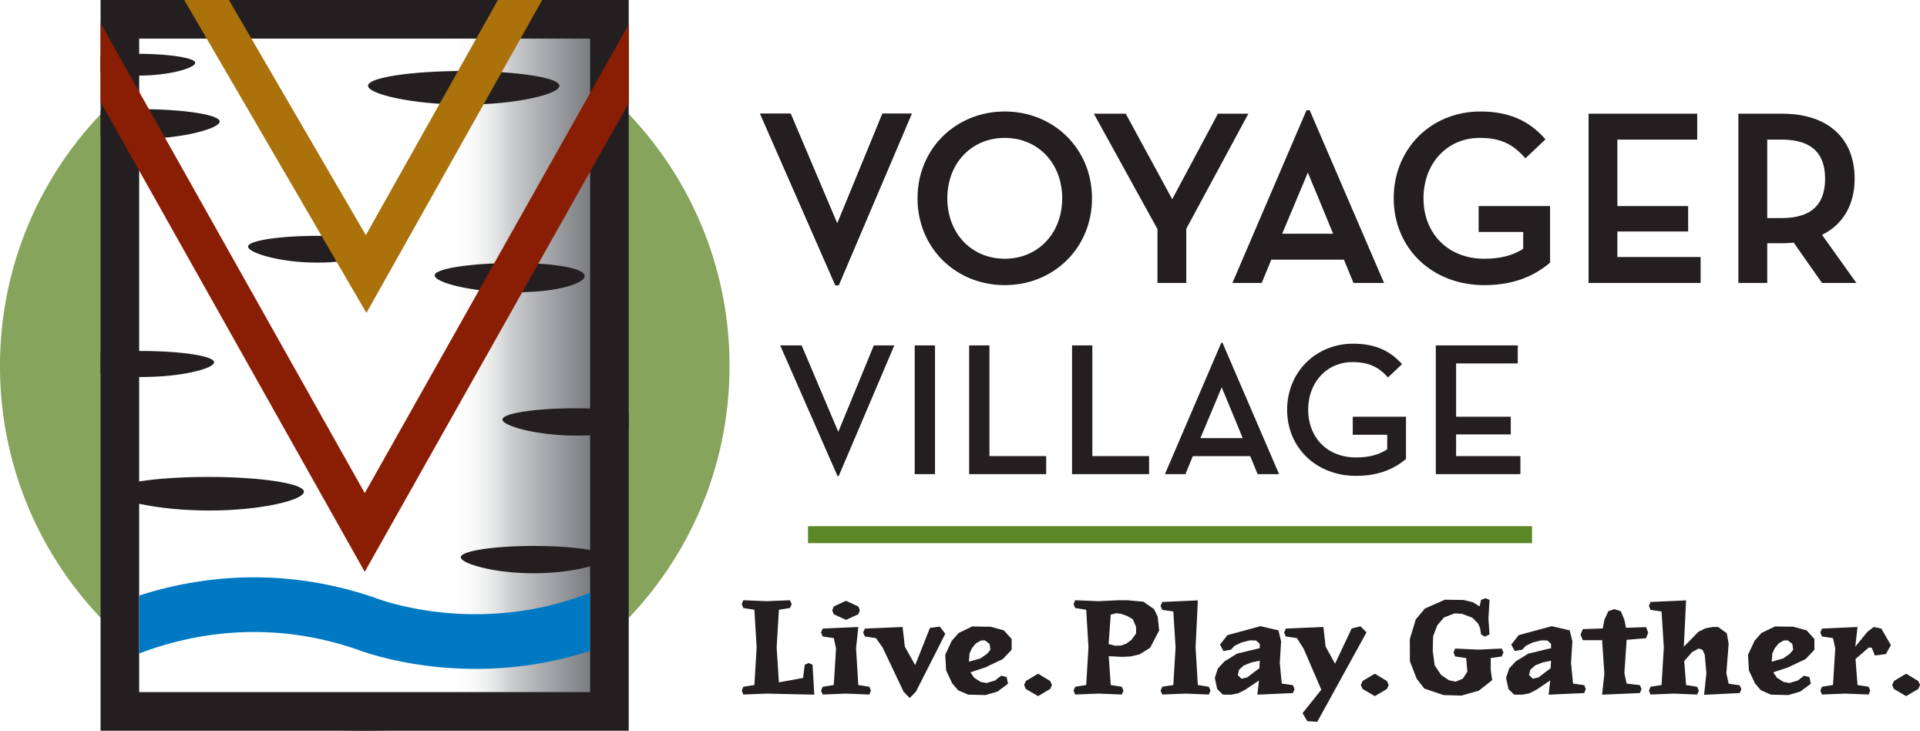 Voyager Village